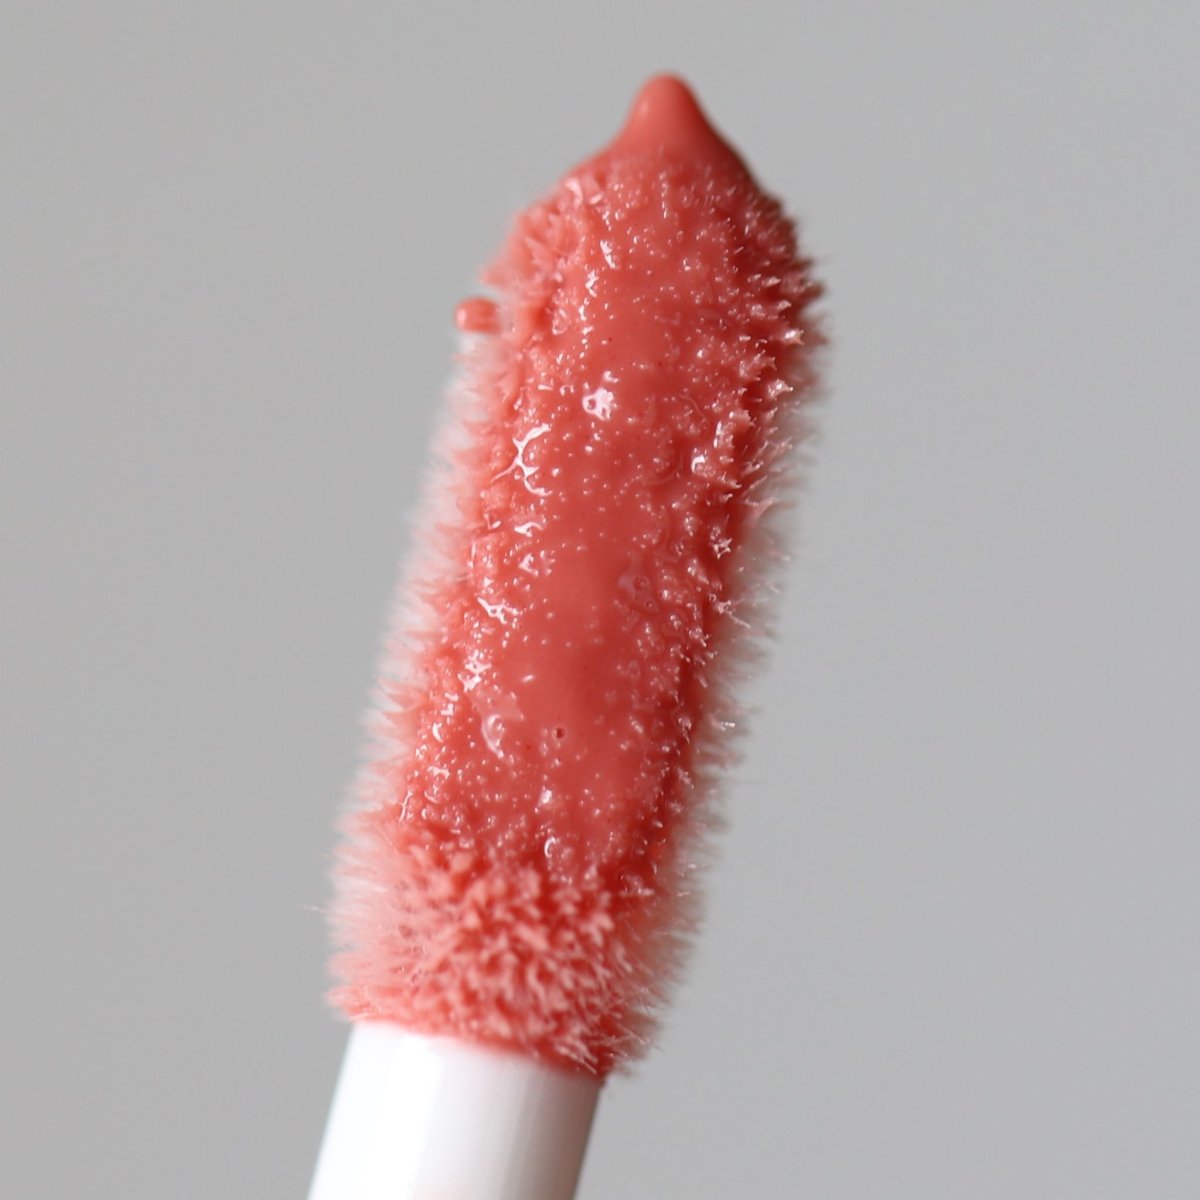 Sponge lip applicator with nude gloss - Instant Crush - Cake Baby - Half Caked